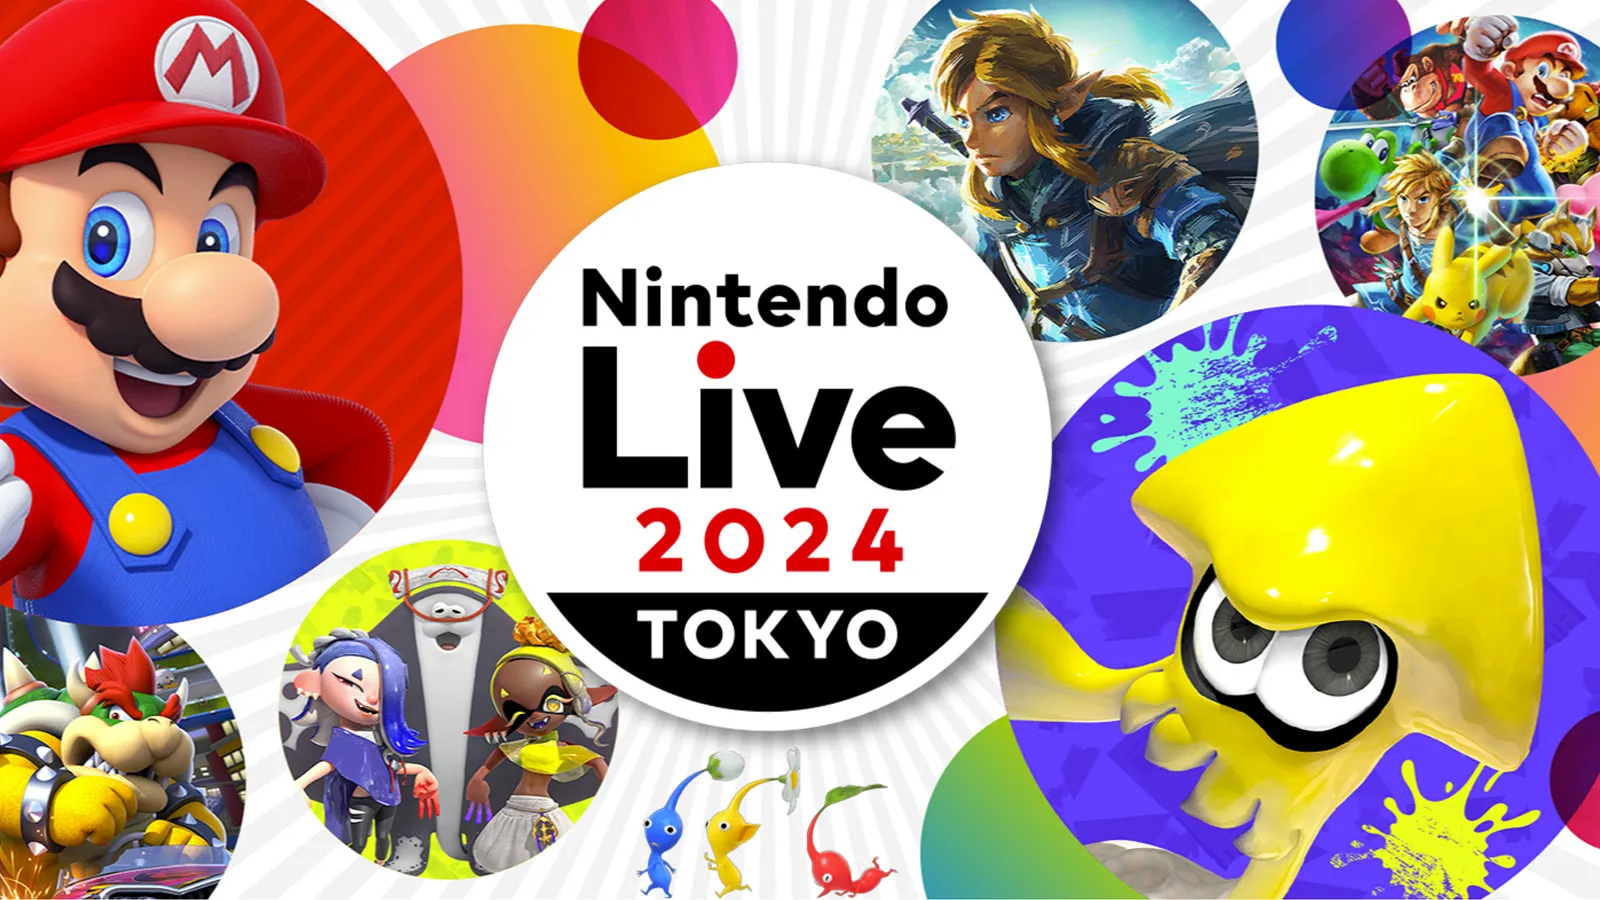 Nintendo of Japan Cancels Nintendo Live Tokyo 2024 Due to Threats Toward Staff